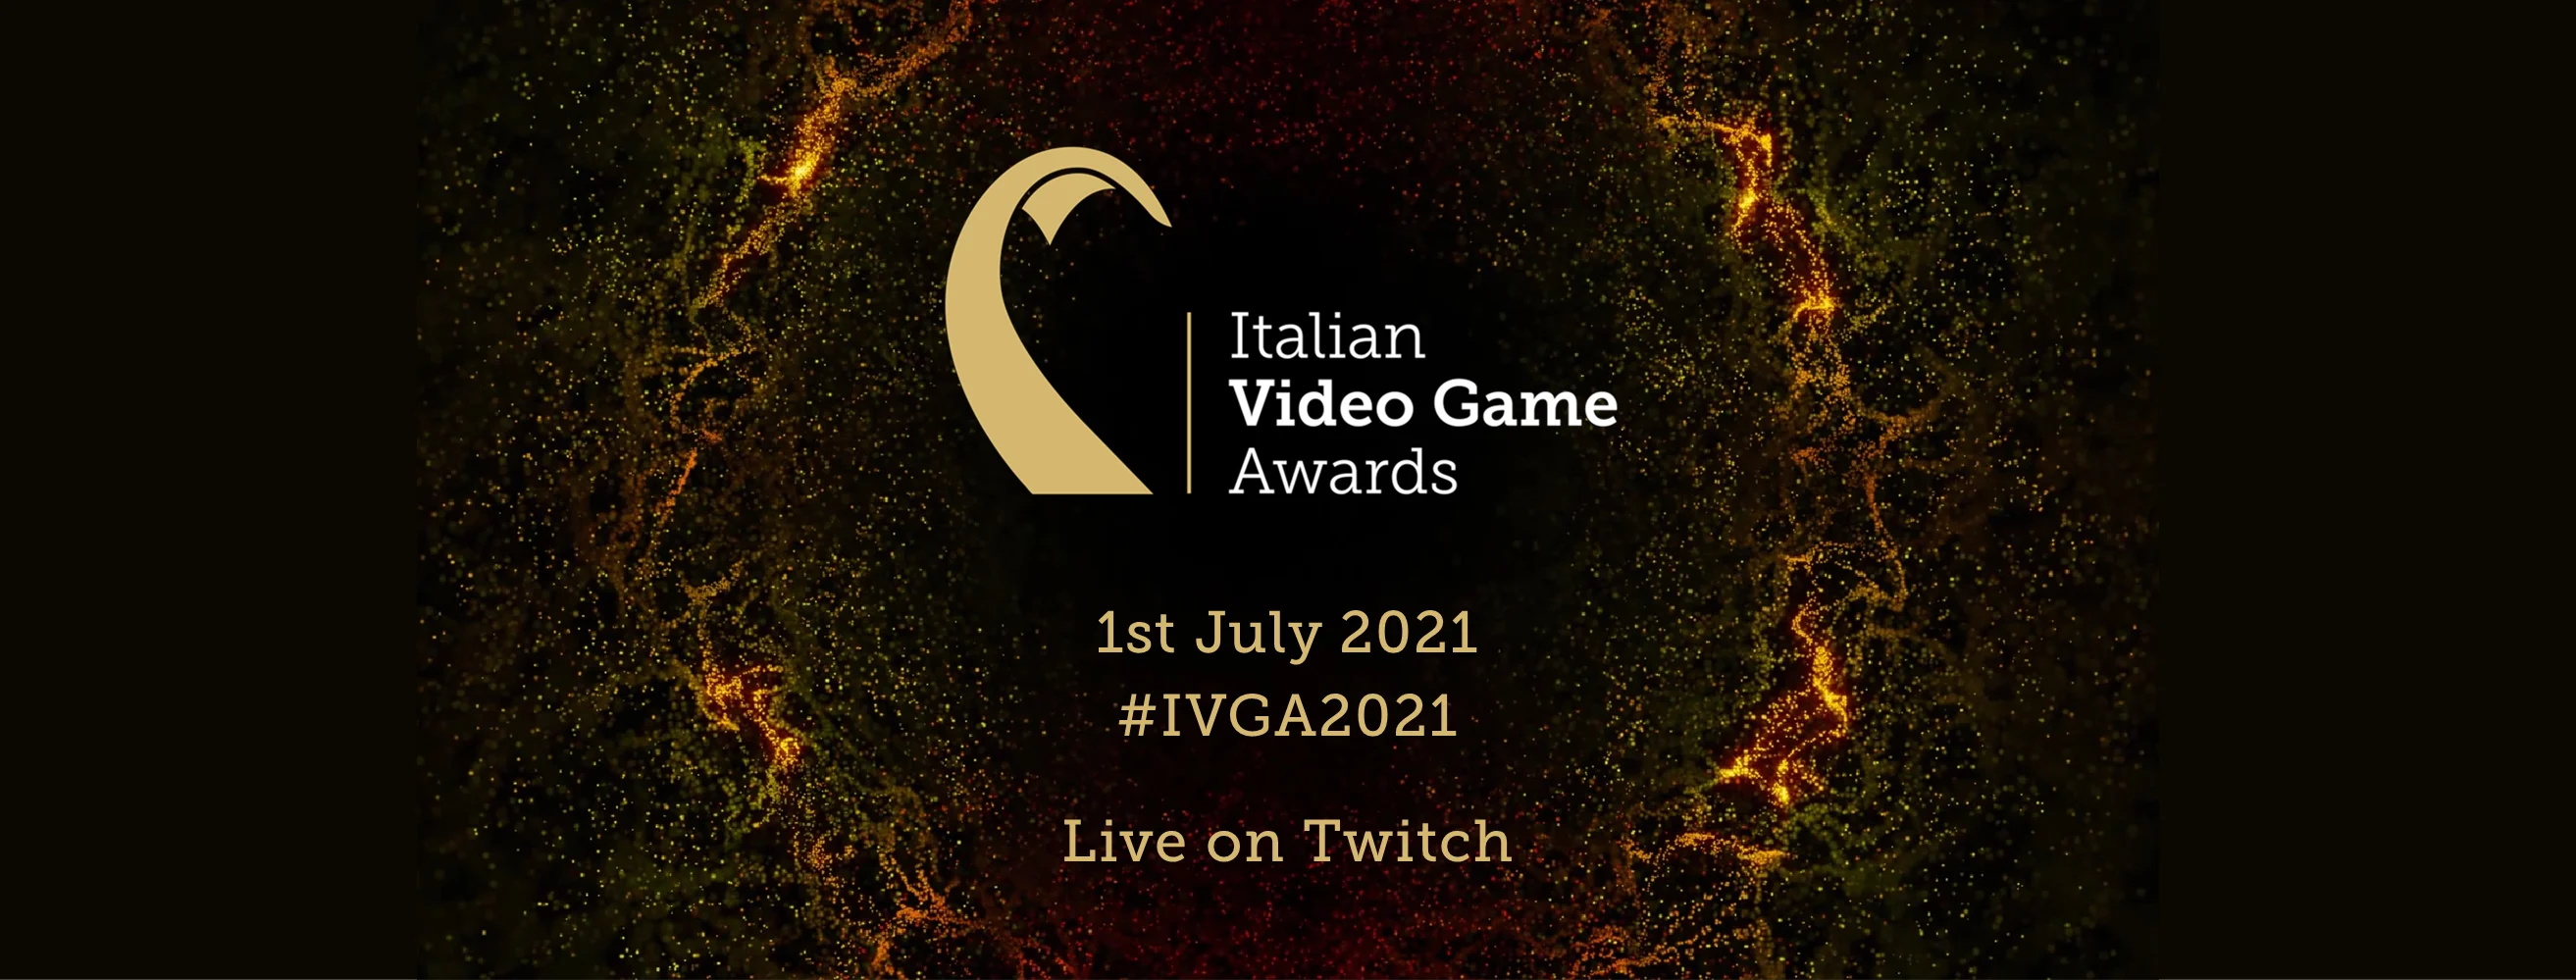 italian video game awards 2021 nomination